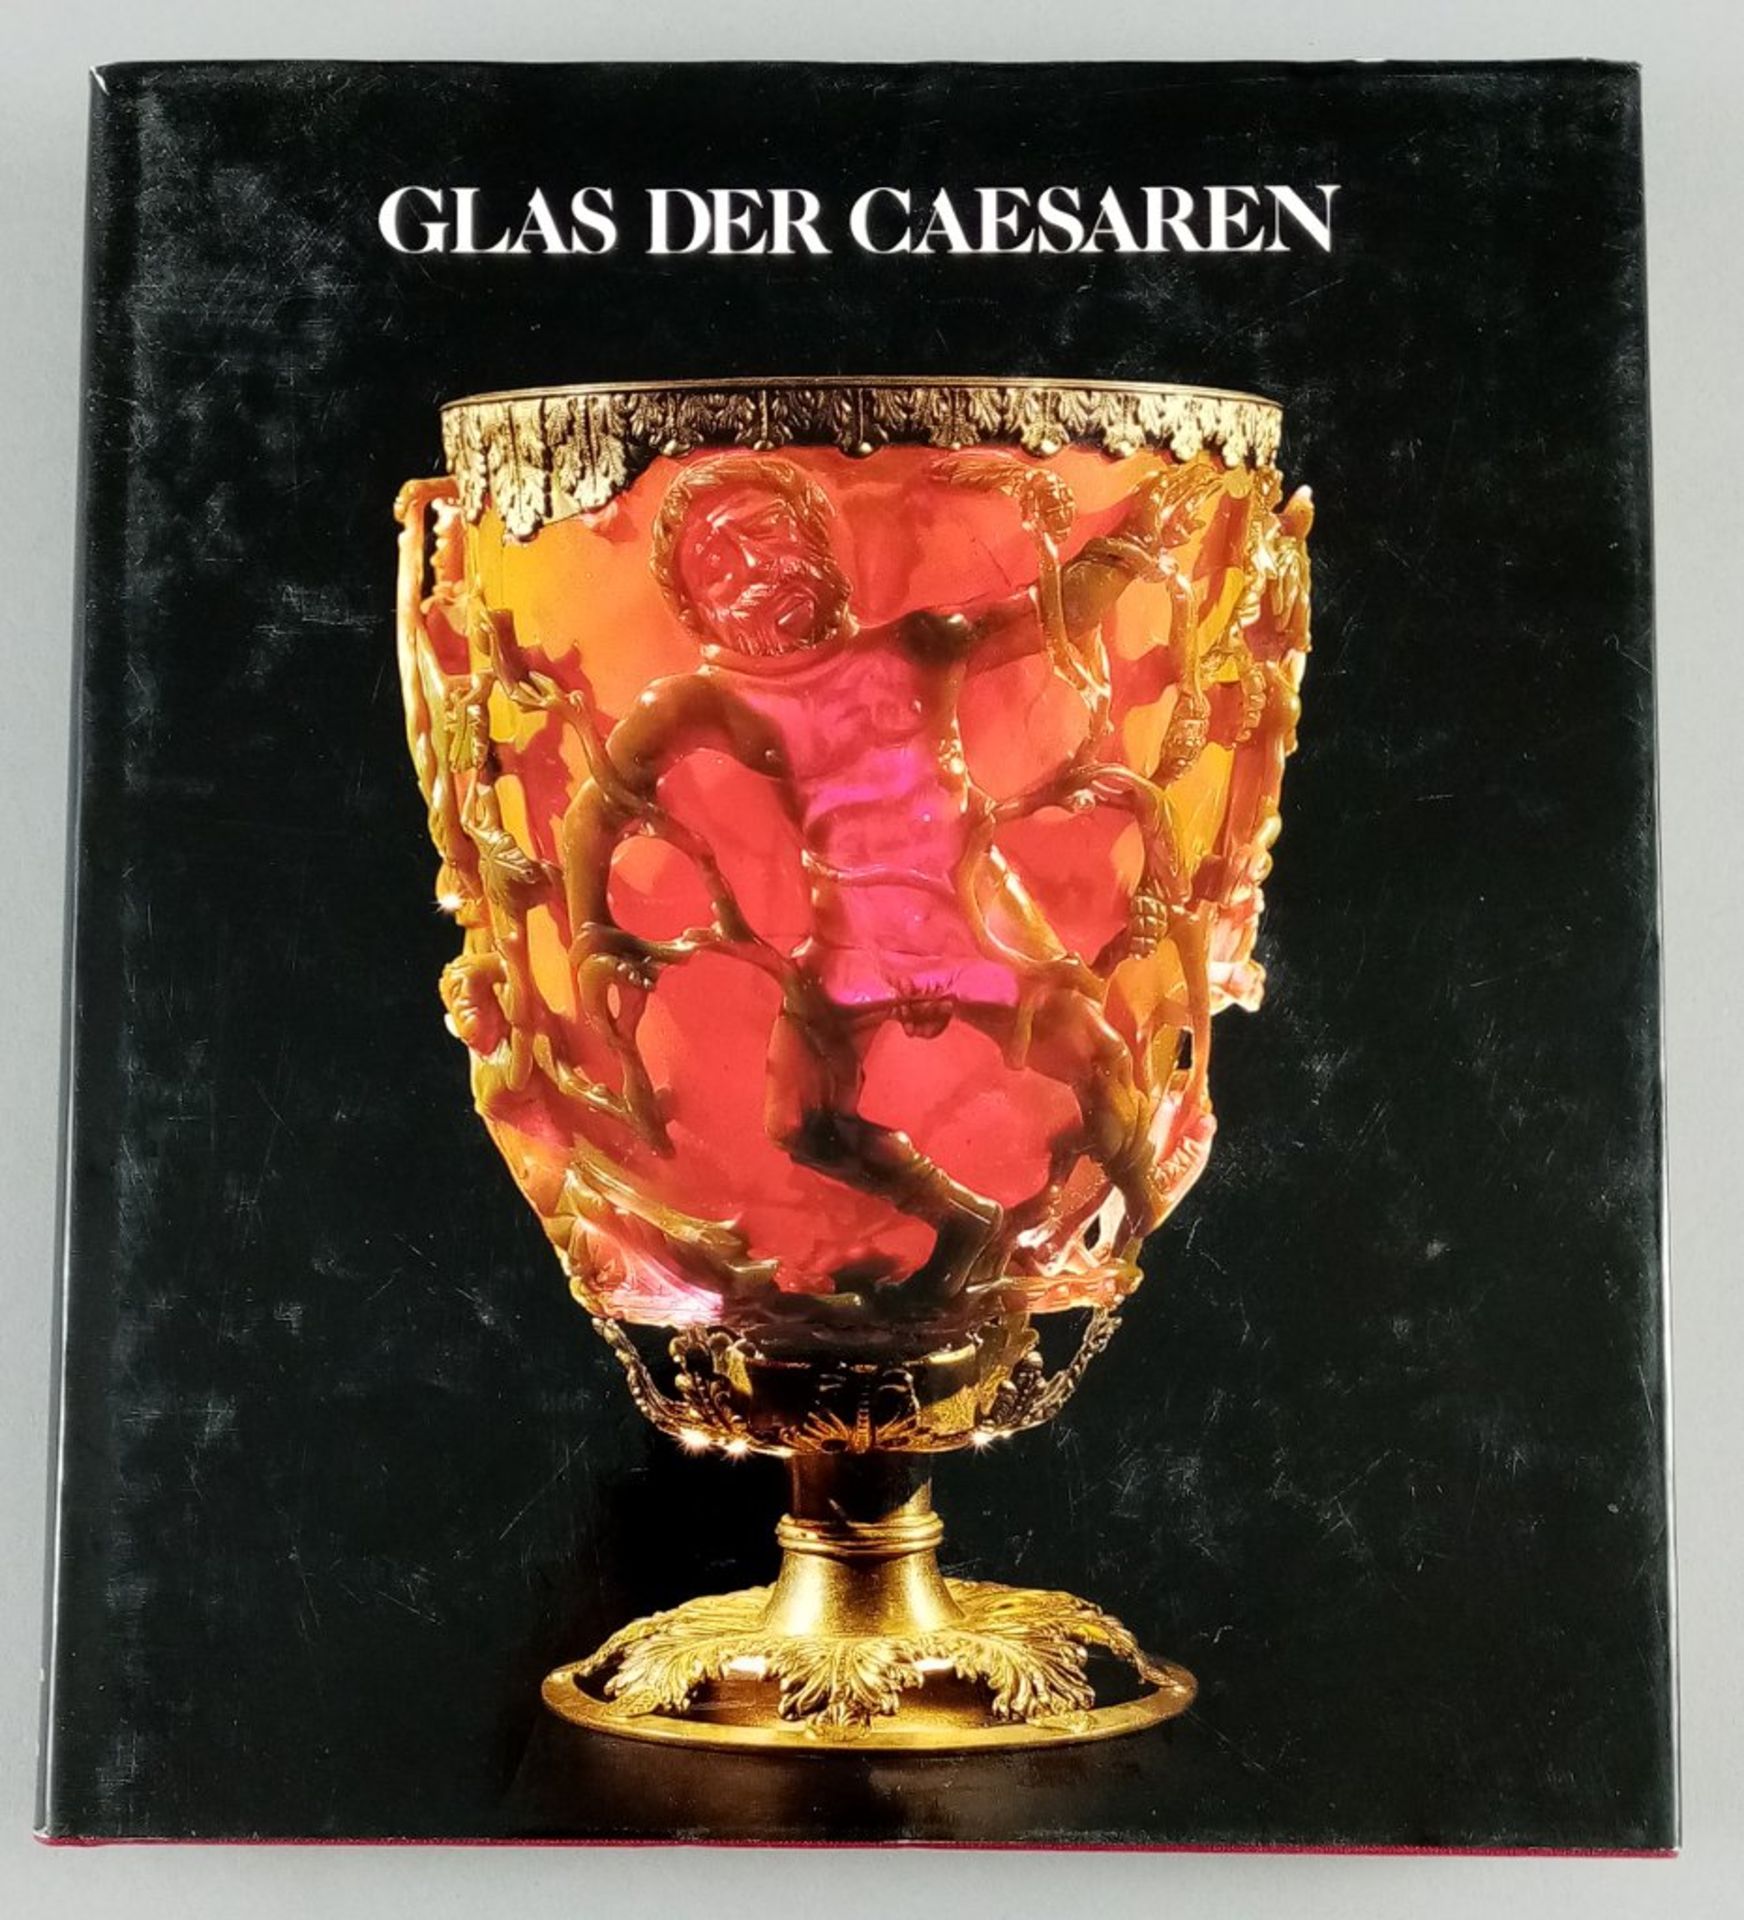 Kunst: Harden, Donald B. Glas der Caesaren.